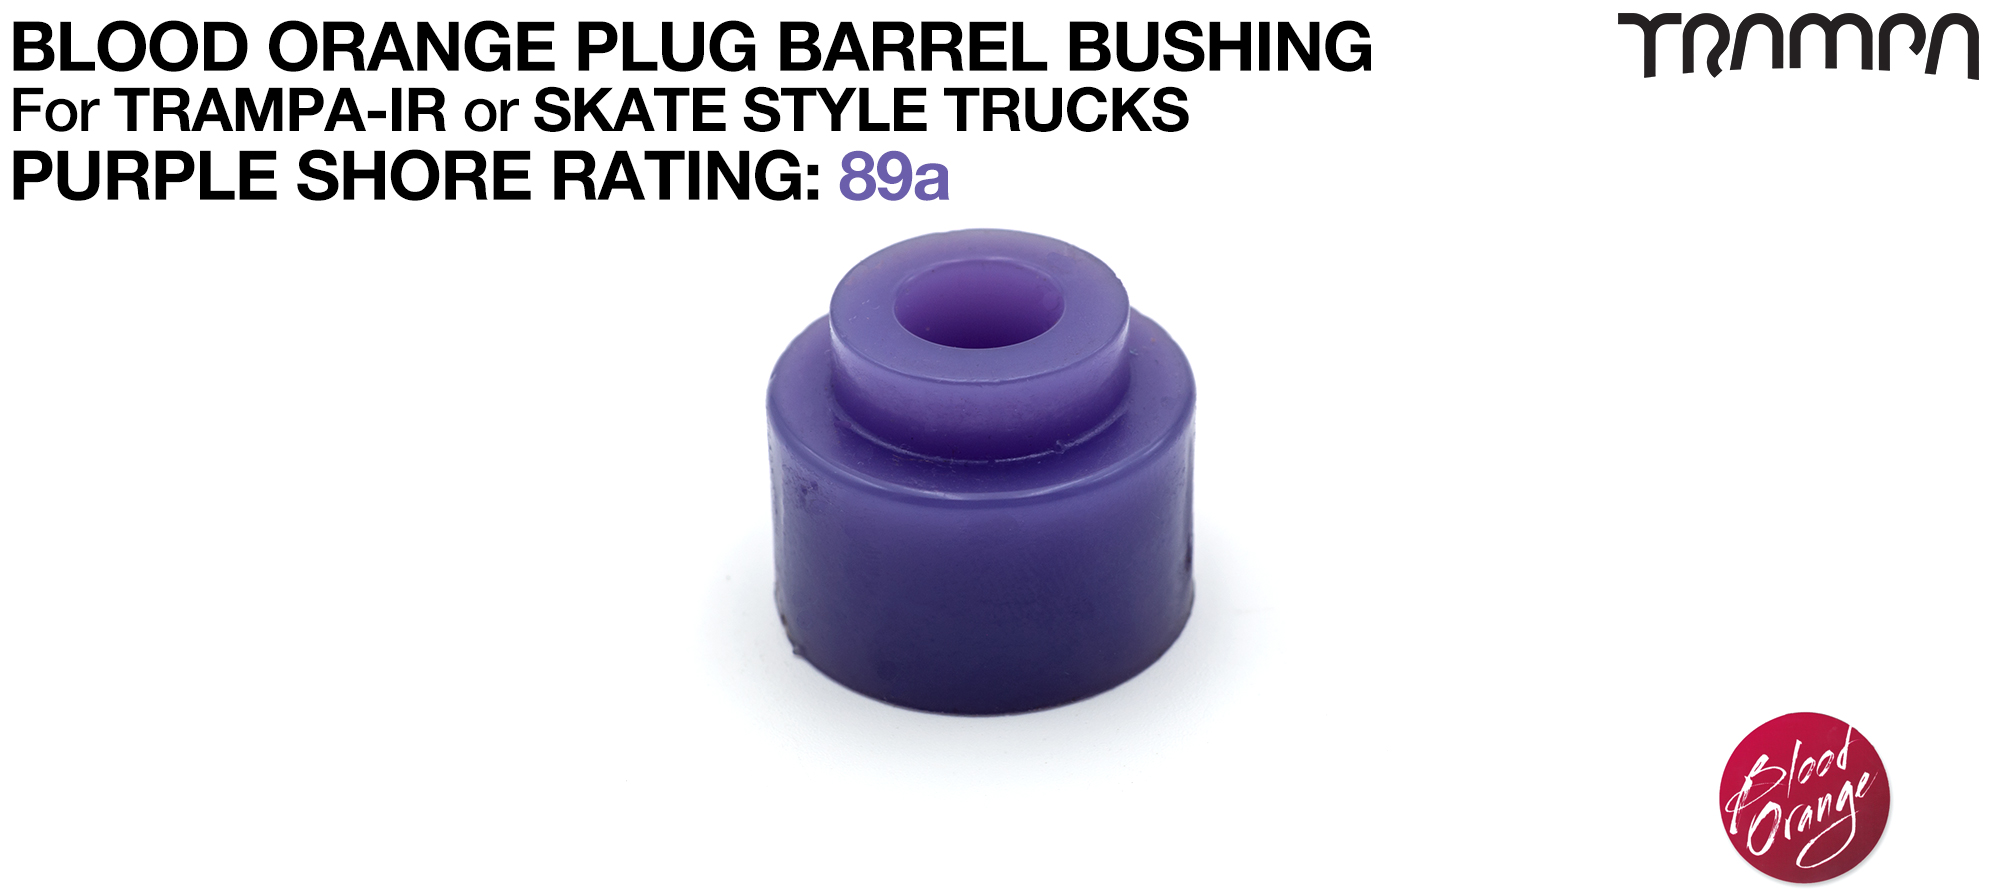 PLUG BARREL Bushings PURPLE - 89a 